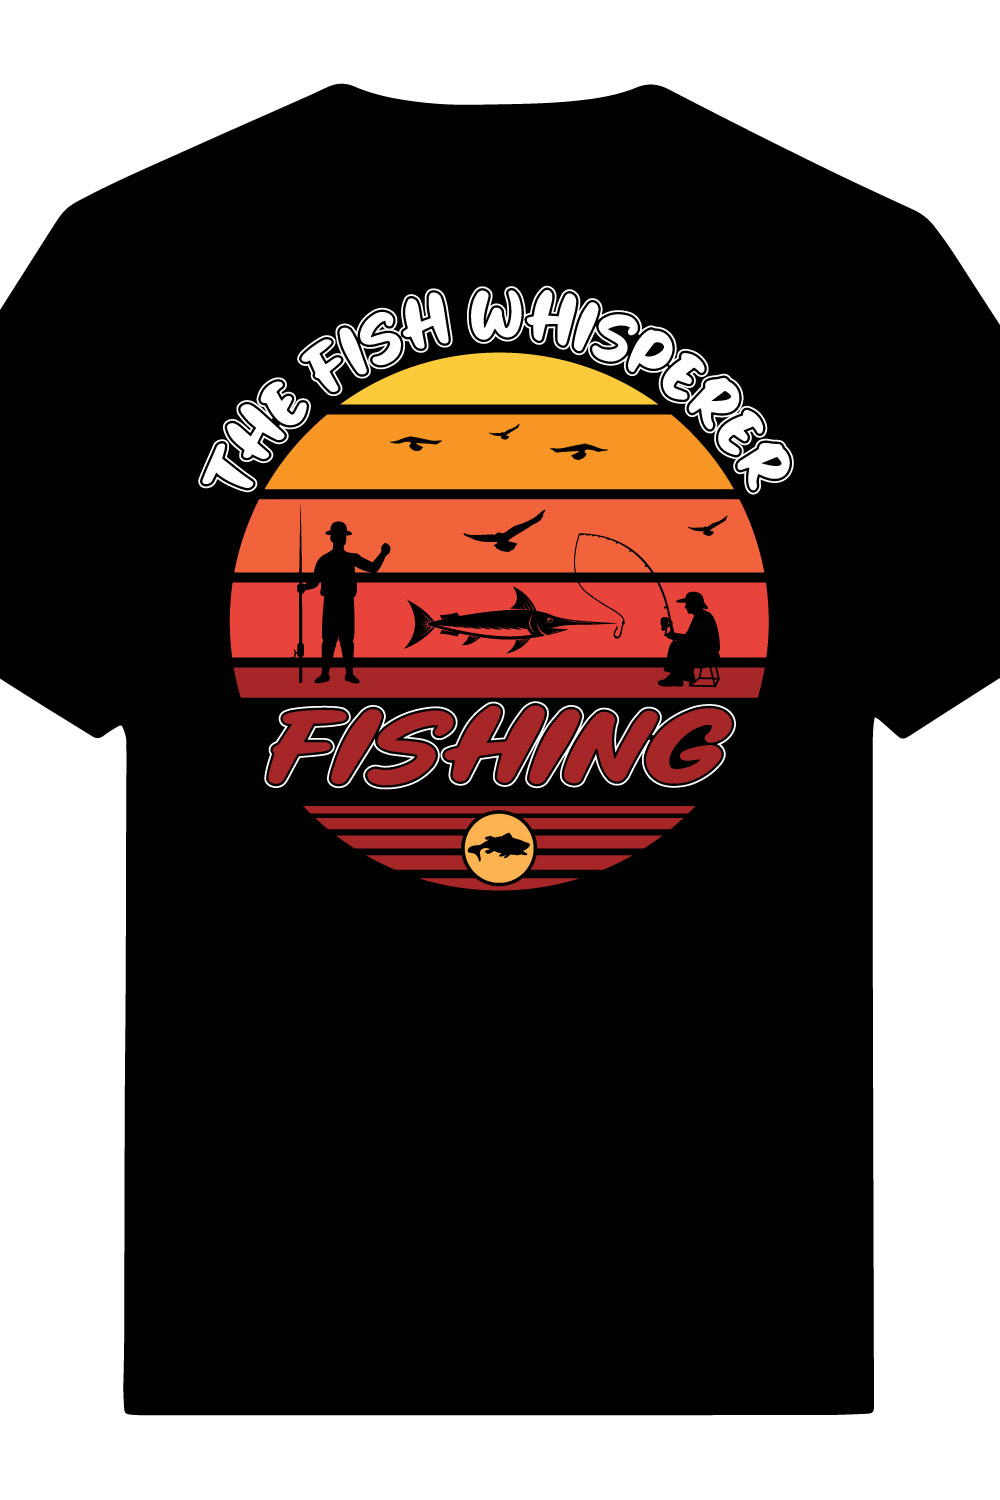 The Fish Whisperer Fishing T-shirt Design pinterest preview image.